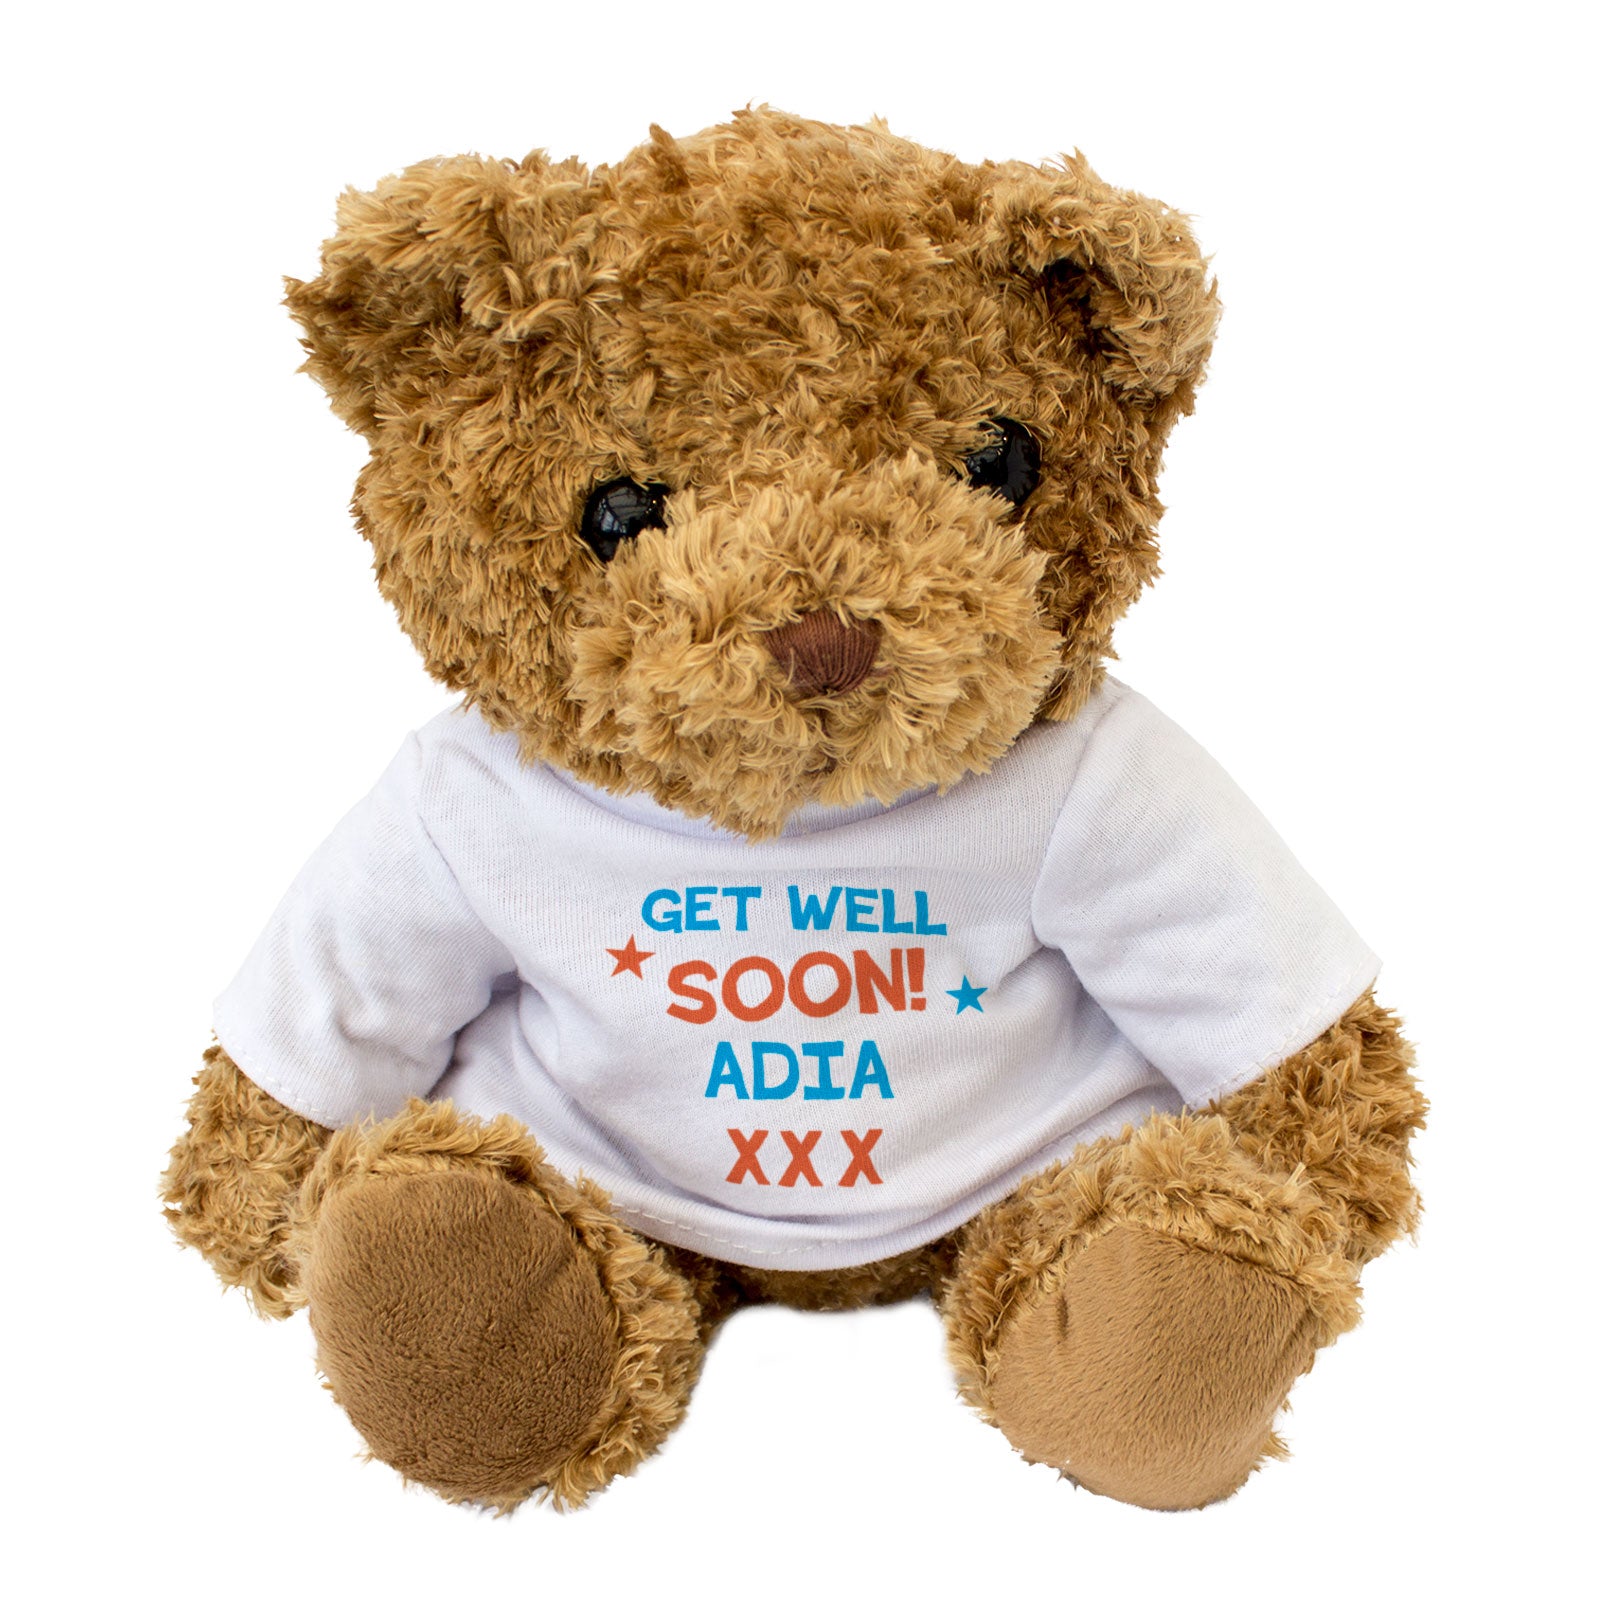 Get Well Soon Adia - Teddy Bear